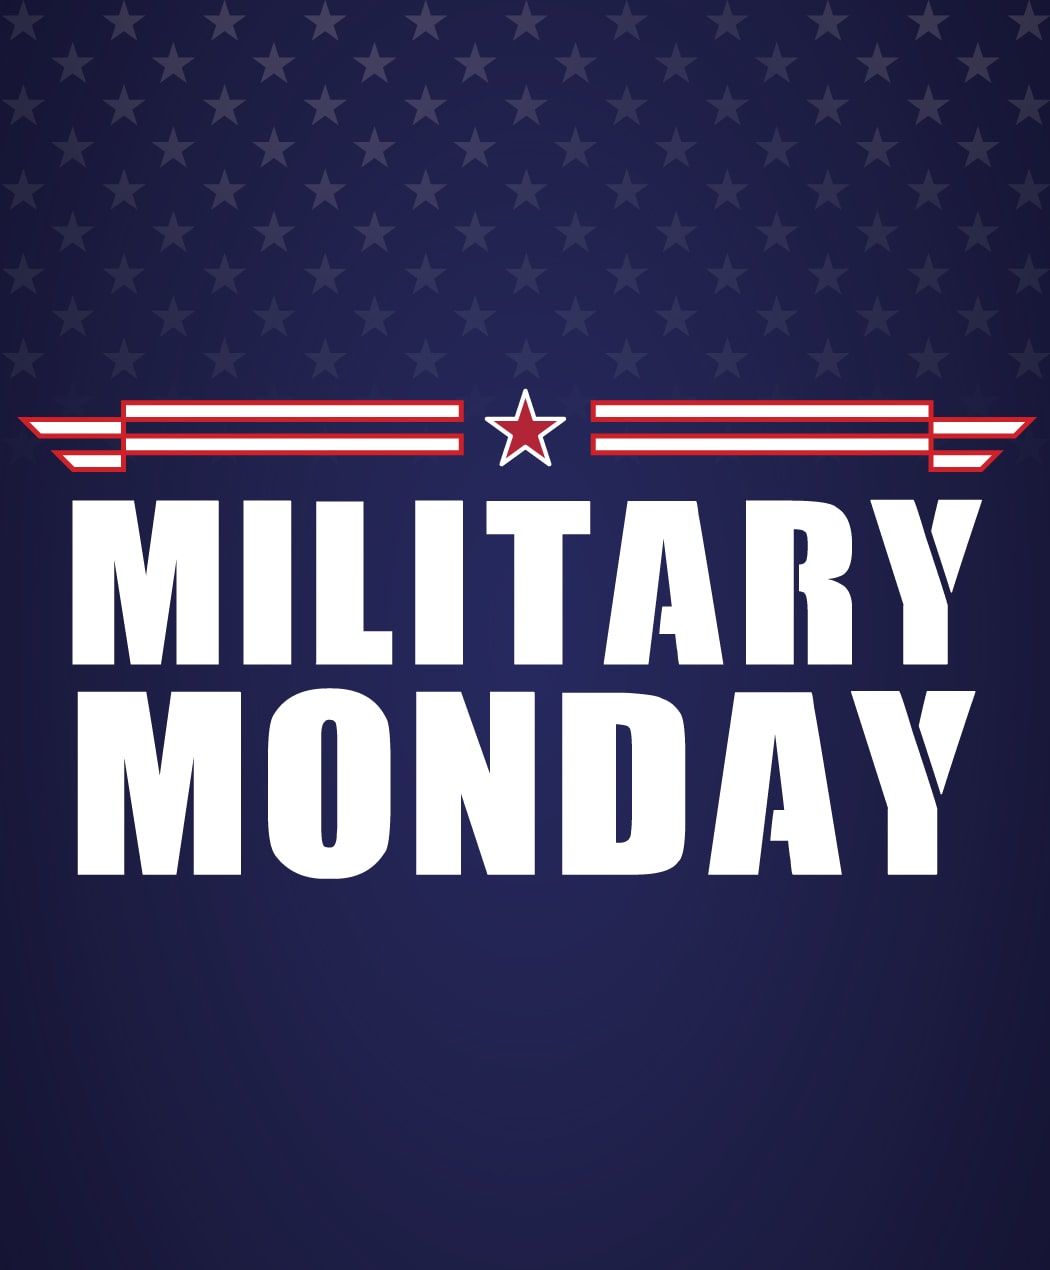 Military Monday casino promotion graphic